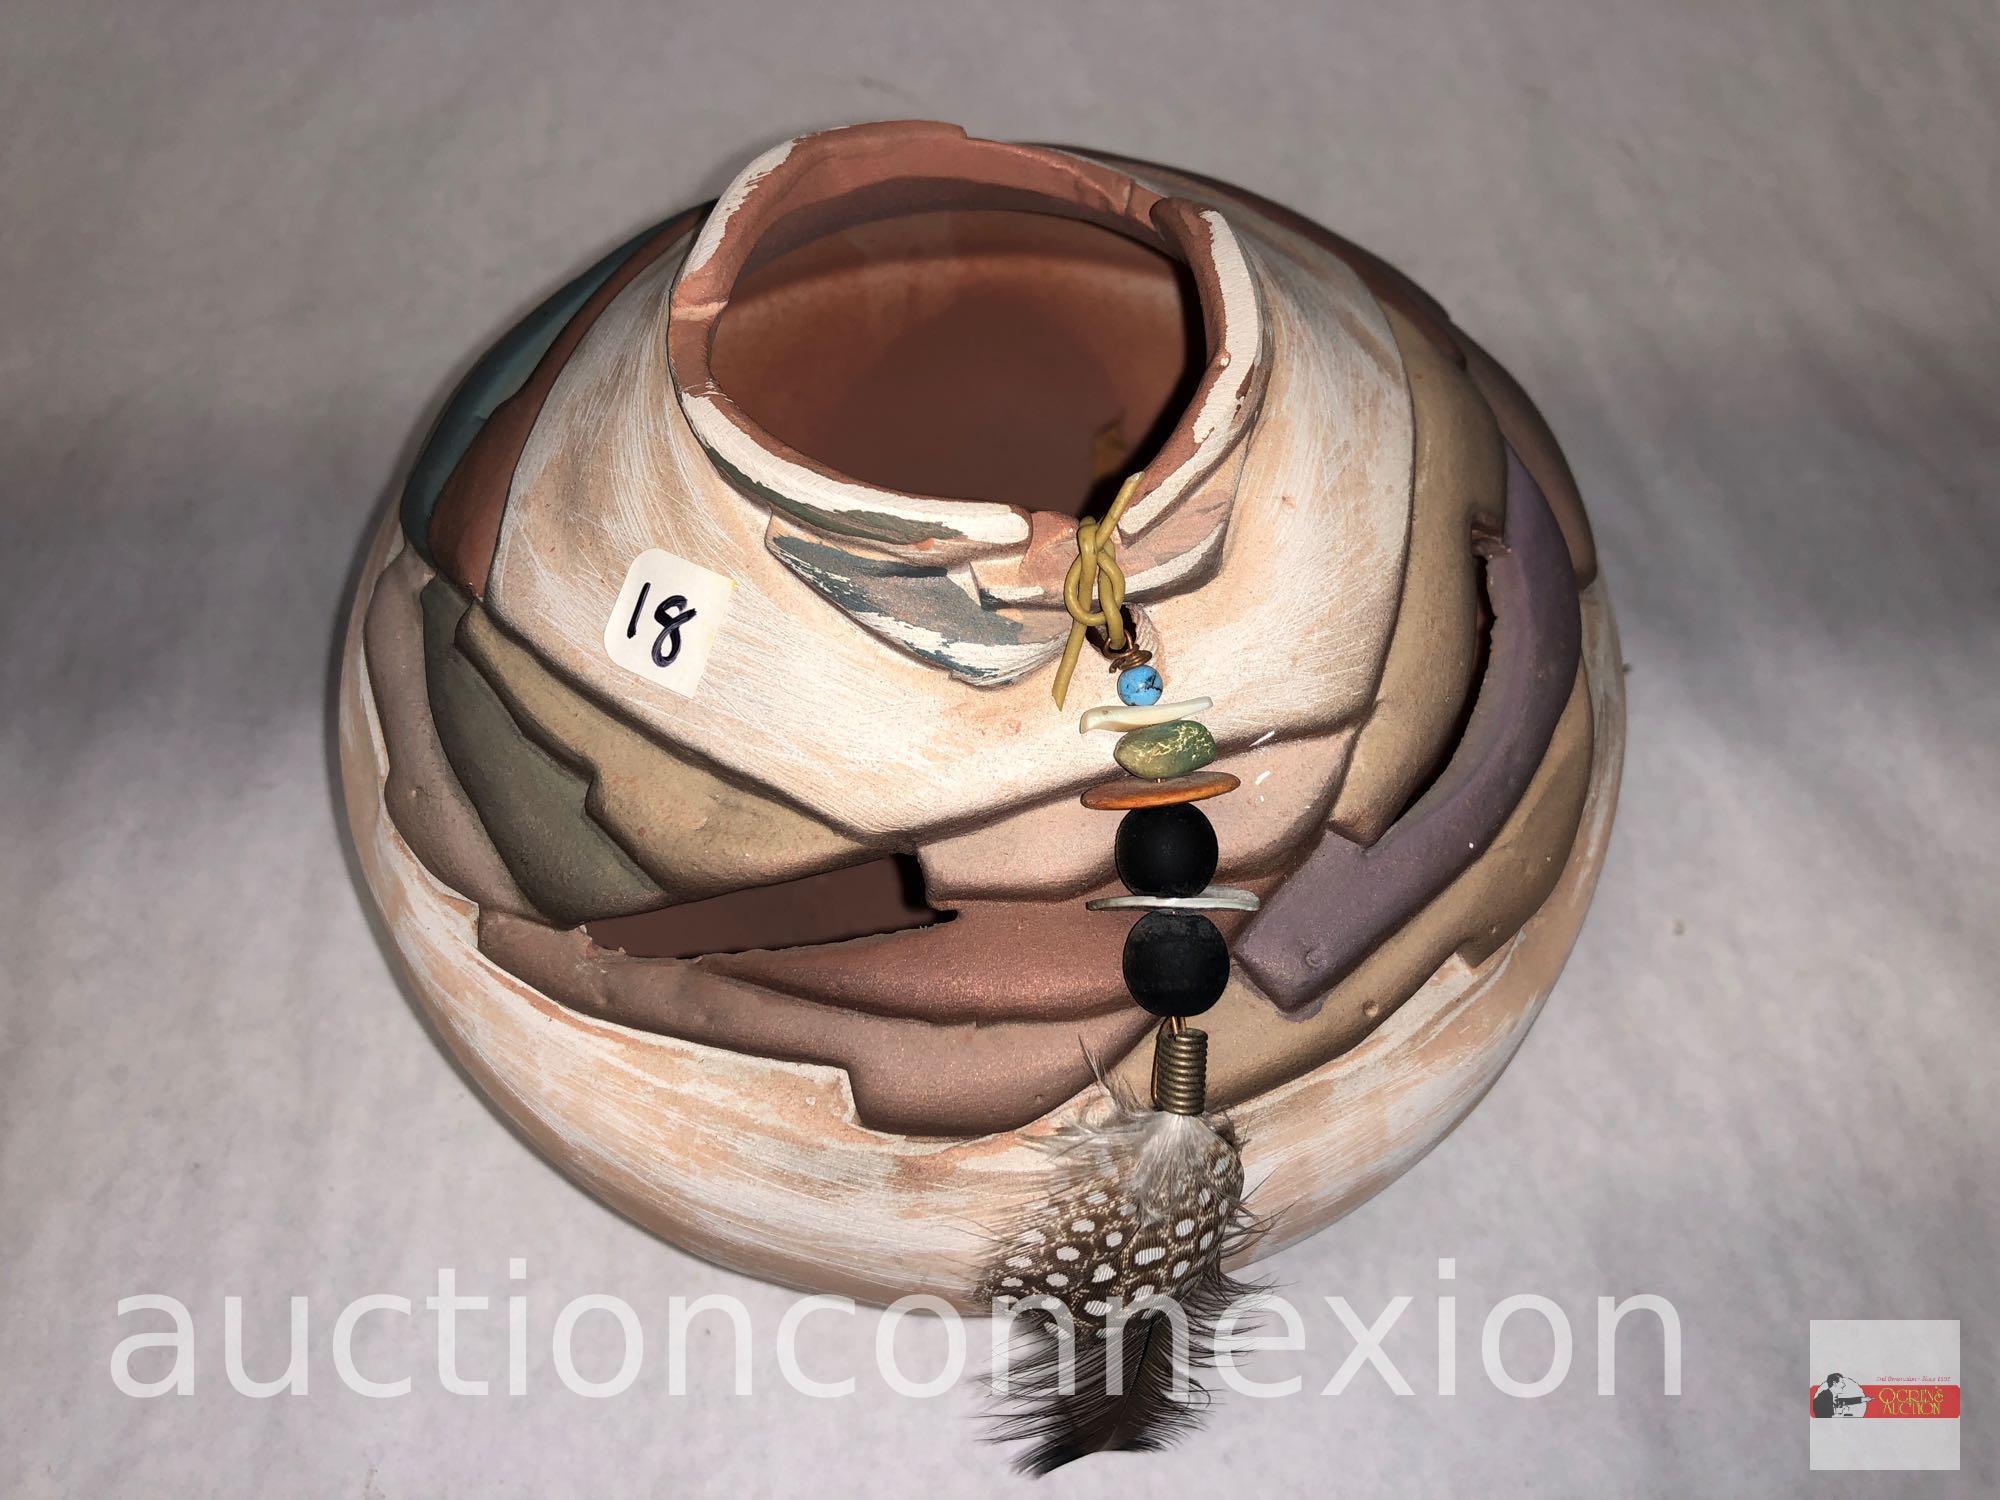 Pottery - Steven Kaye Designs, signed, dated 1998, Southwest stled vase